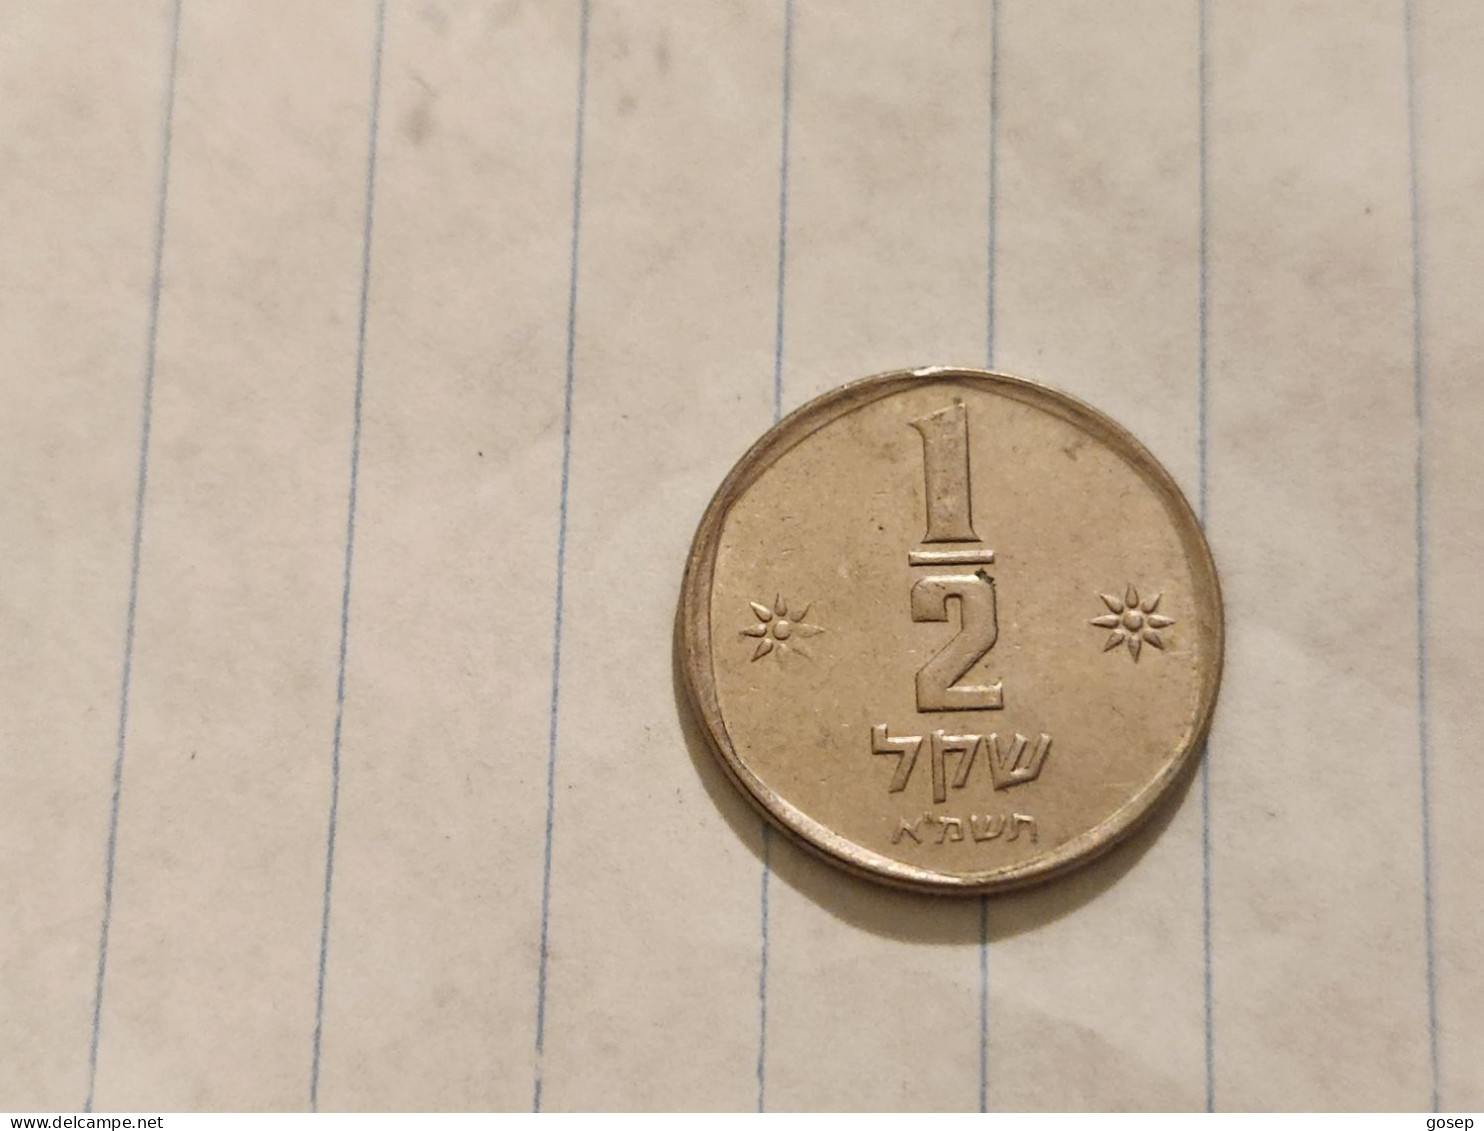 Israel-Coins-SHEKEL(1985-1981)-1/2 SHEKEL-Hapanka 32-(1981)-(23)-תשמ"א-NIKEL-good - Israel